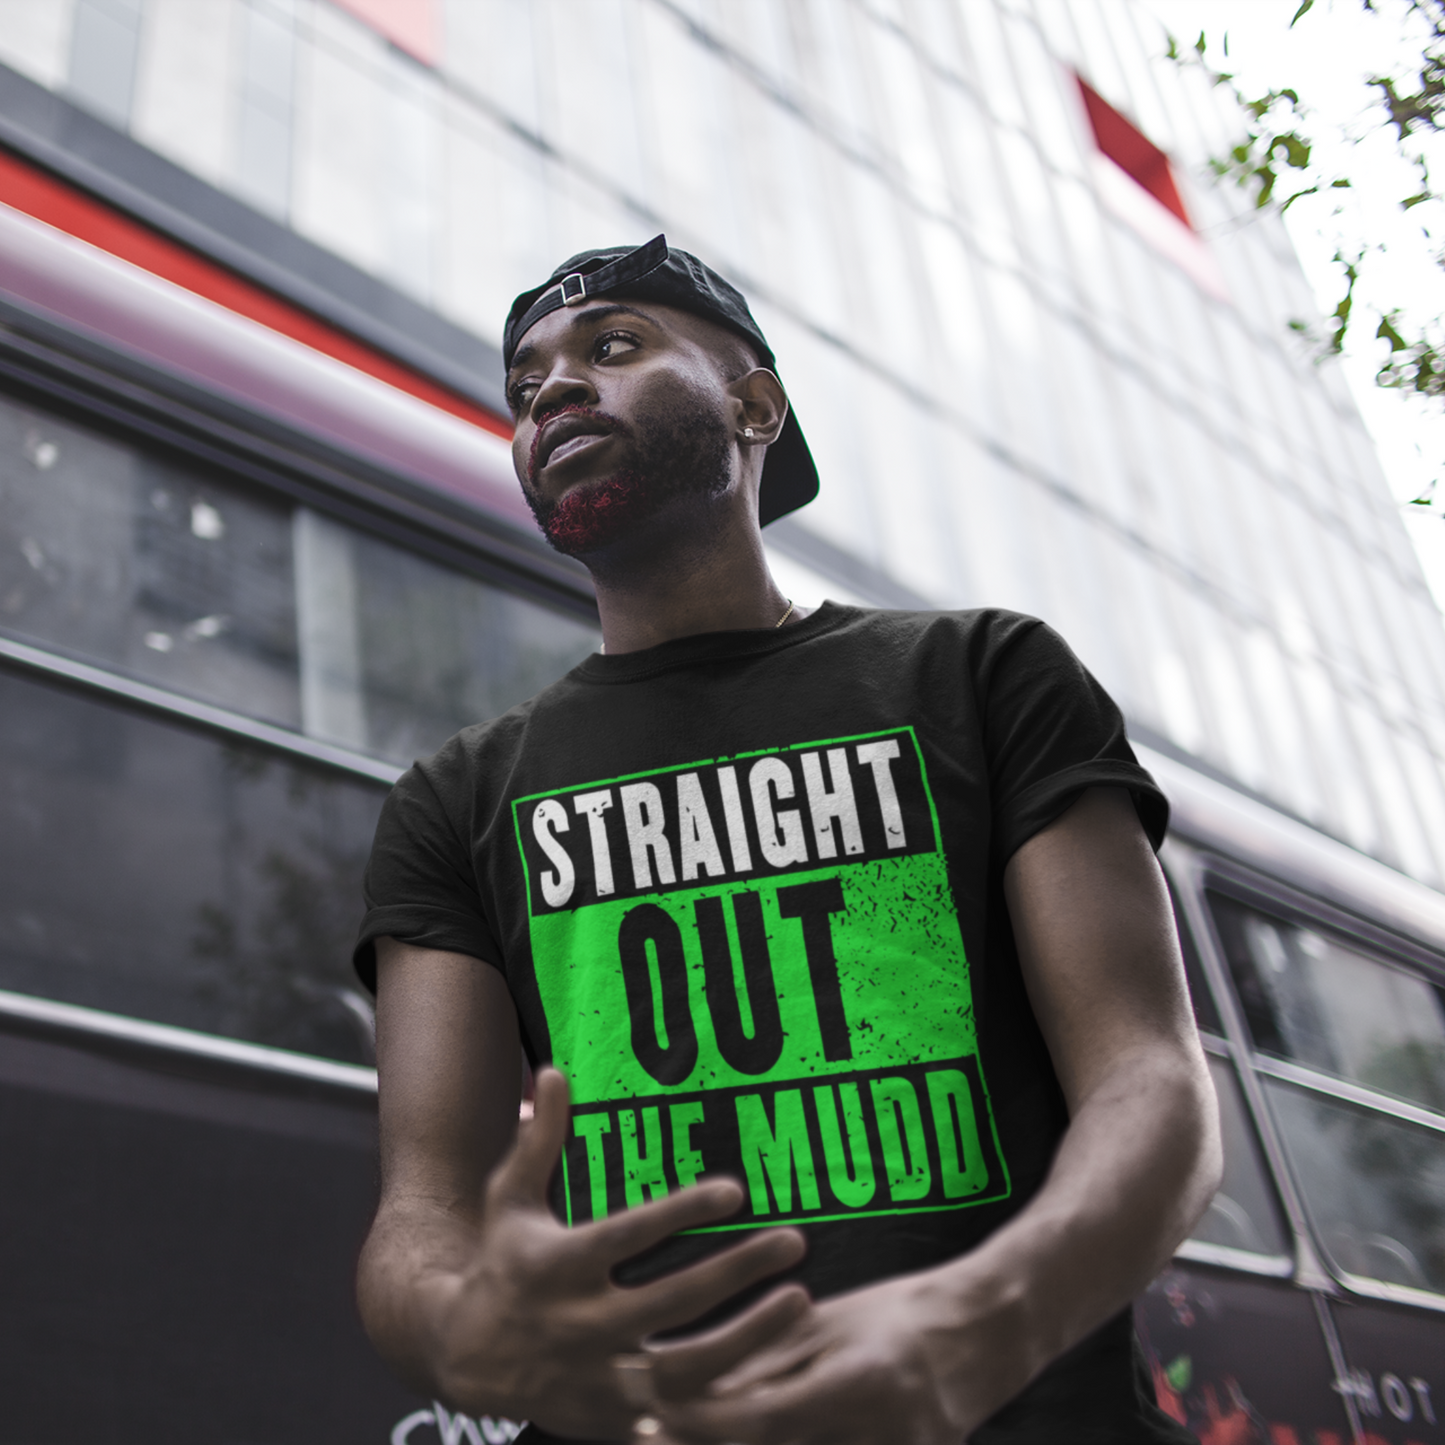 Mudd Brothers Premium "Straight Out The Mudd" T-Shirt